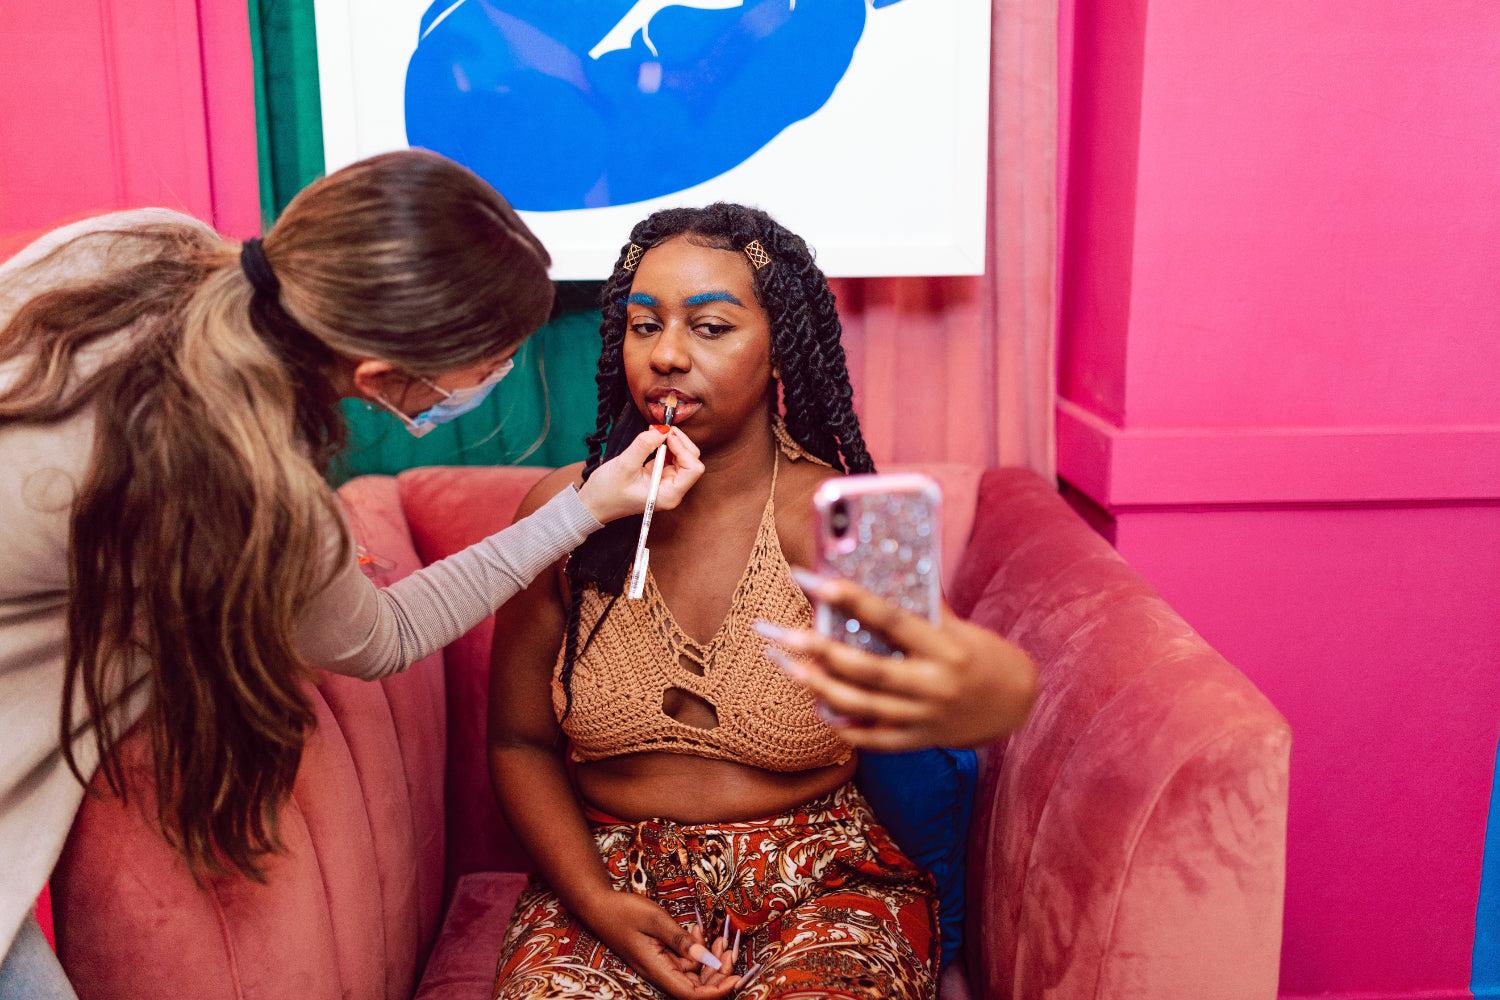 A make-up artist applies cosmetics to a model